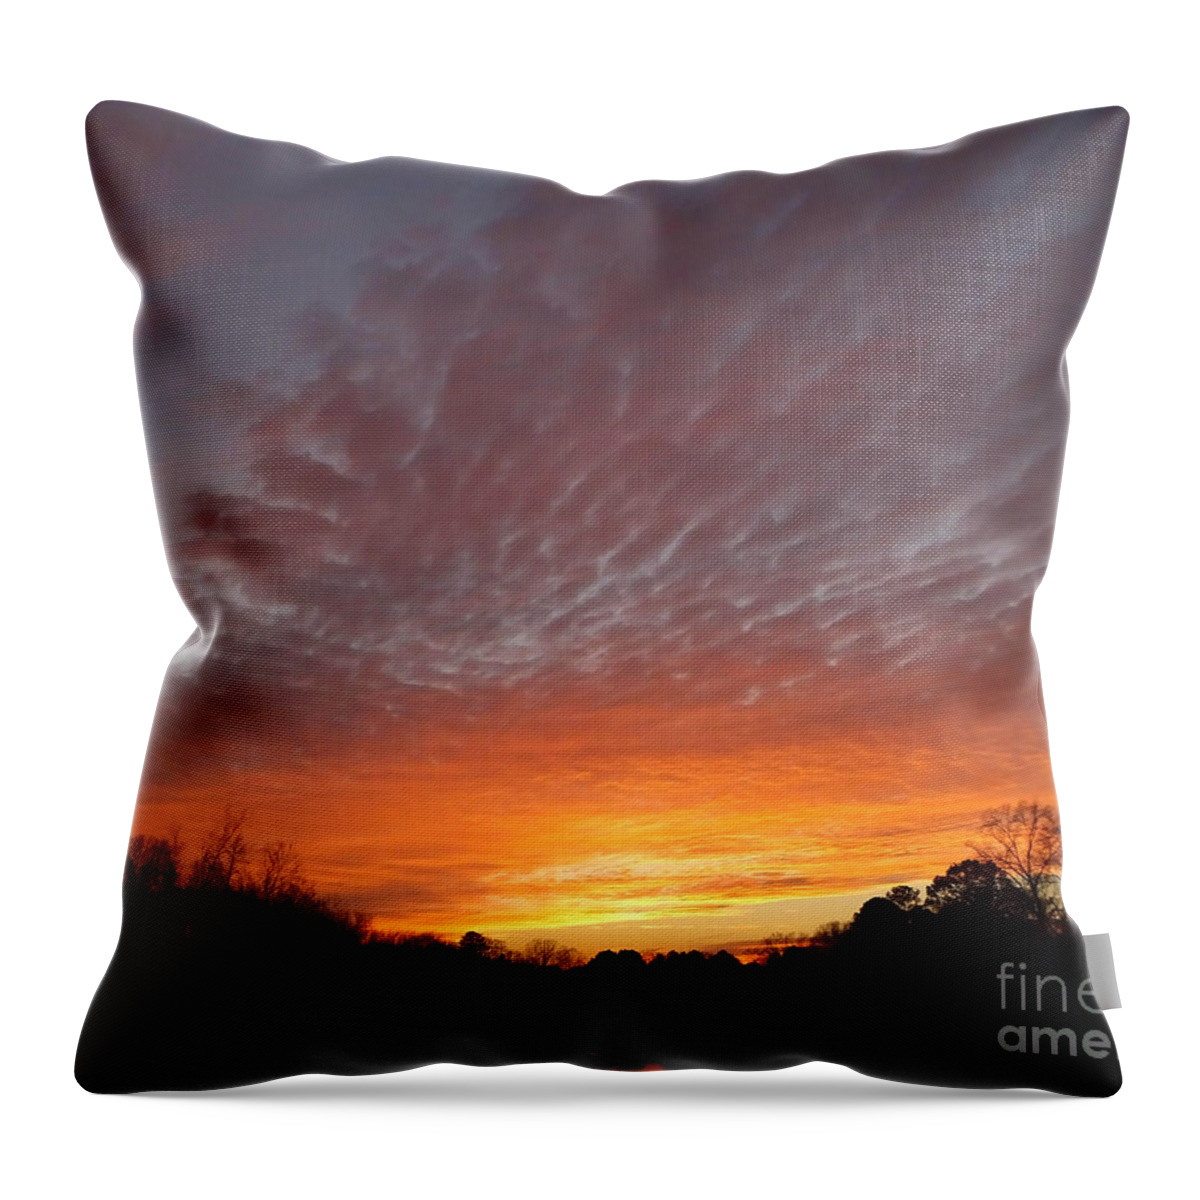 Sunset Throw Pillow featuring the photograph March Sunset by Lizi Beard-Ward